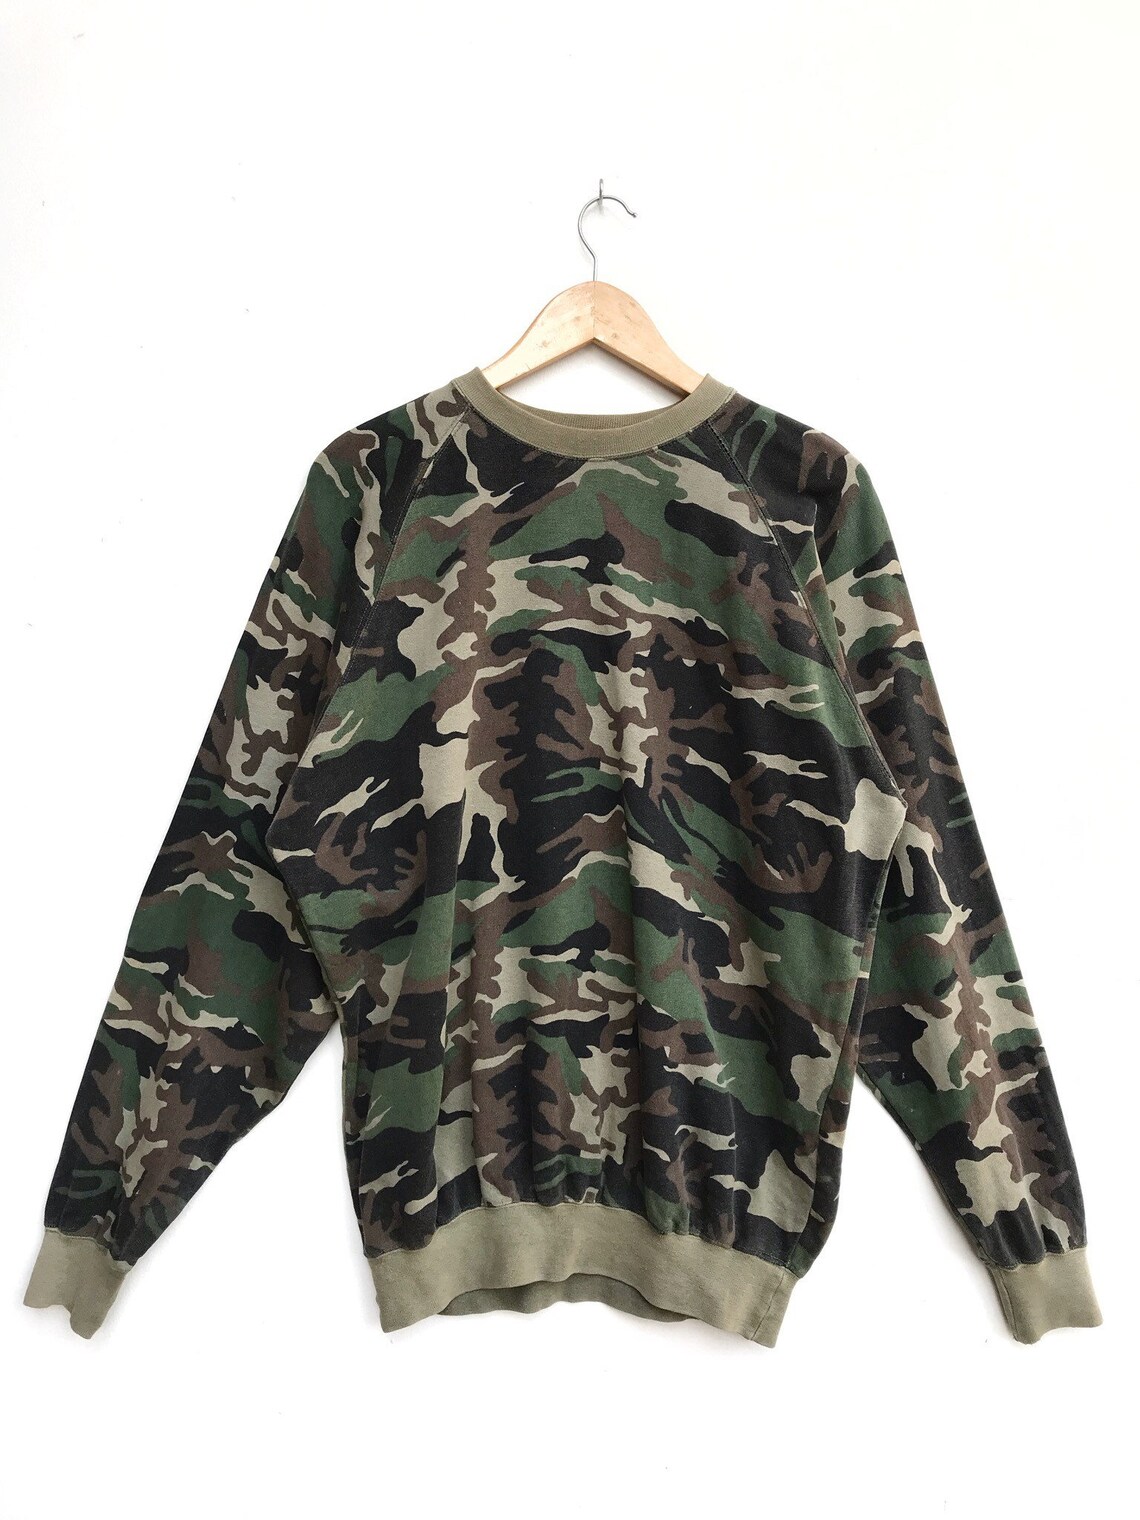 Vintage Camouflage Sweatshirt / Street Fashion / Vintage Army | Etsy